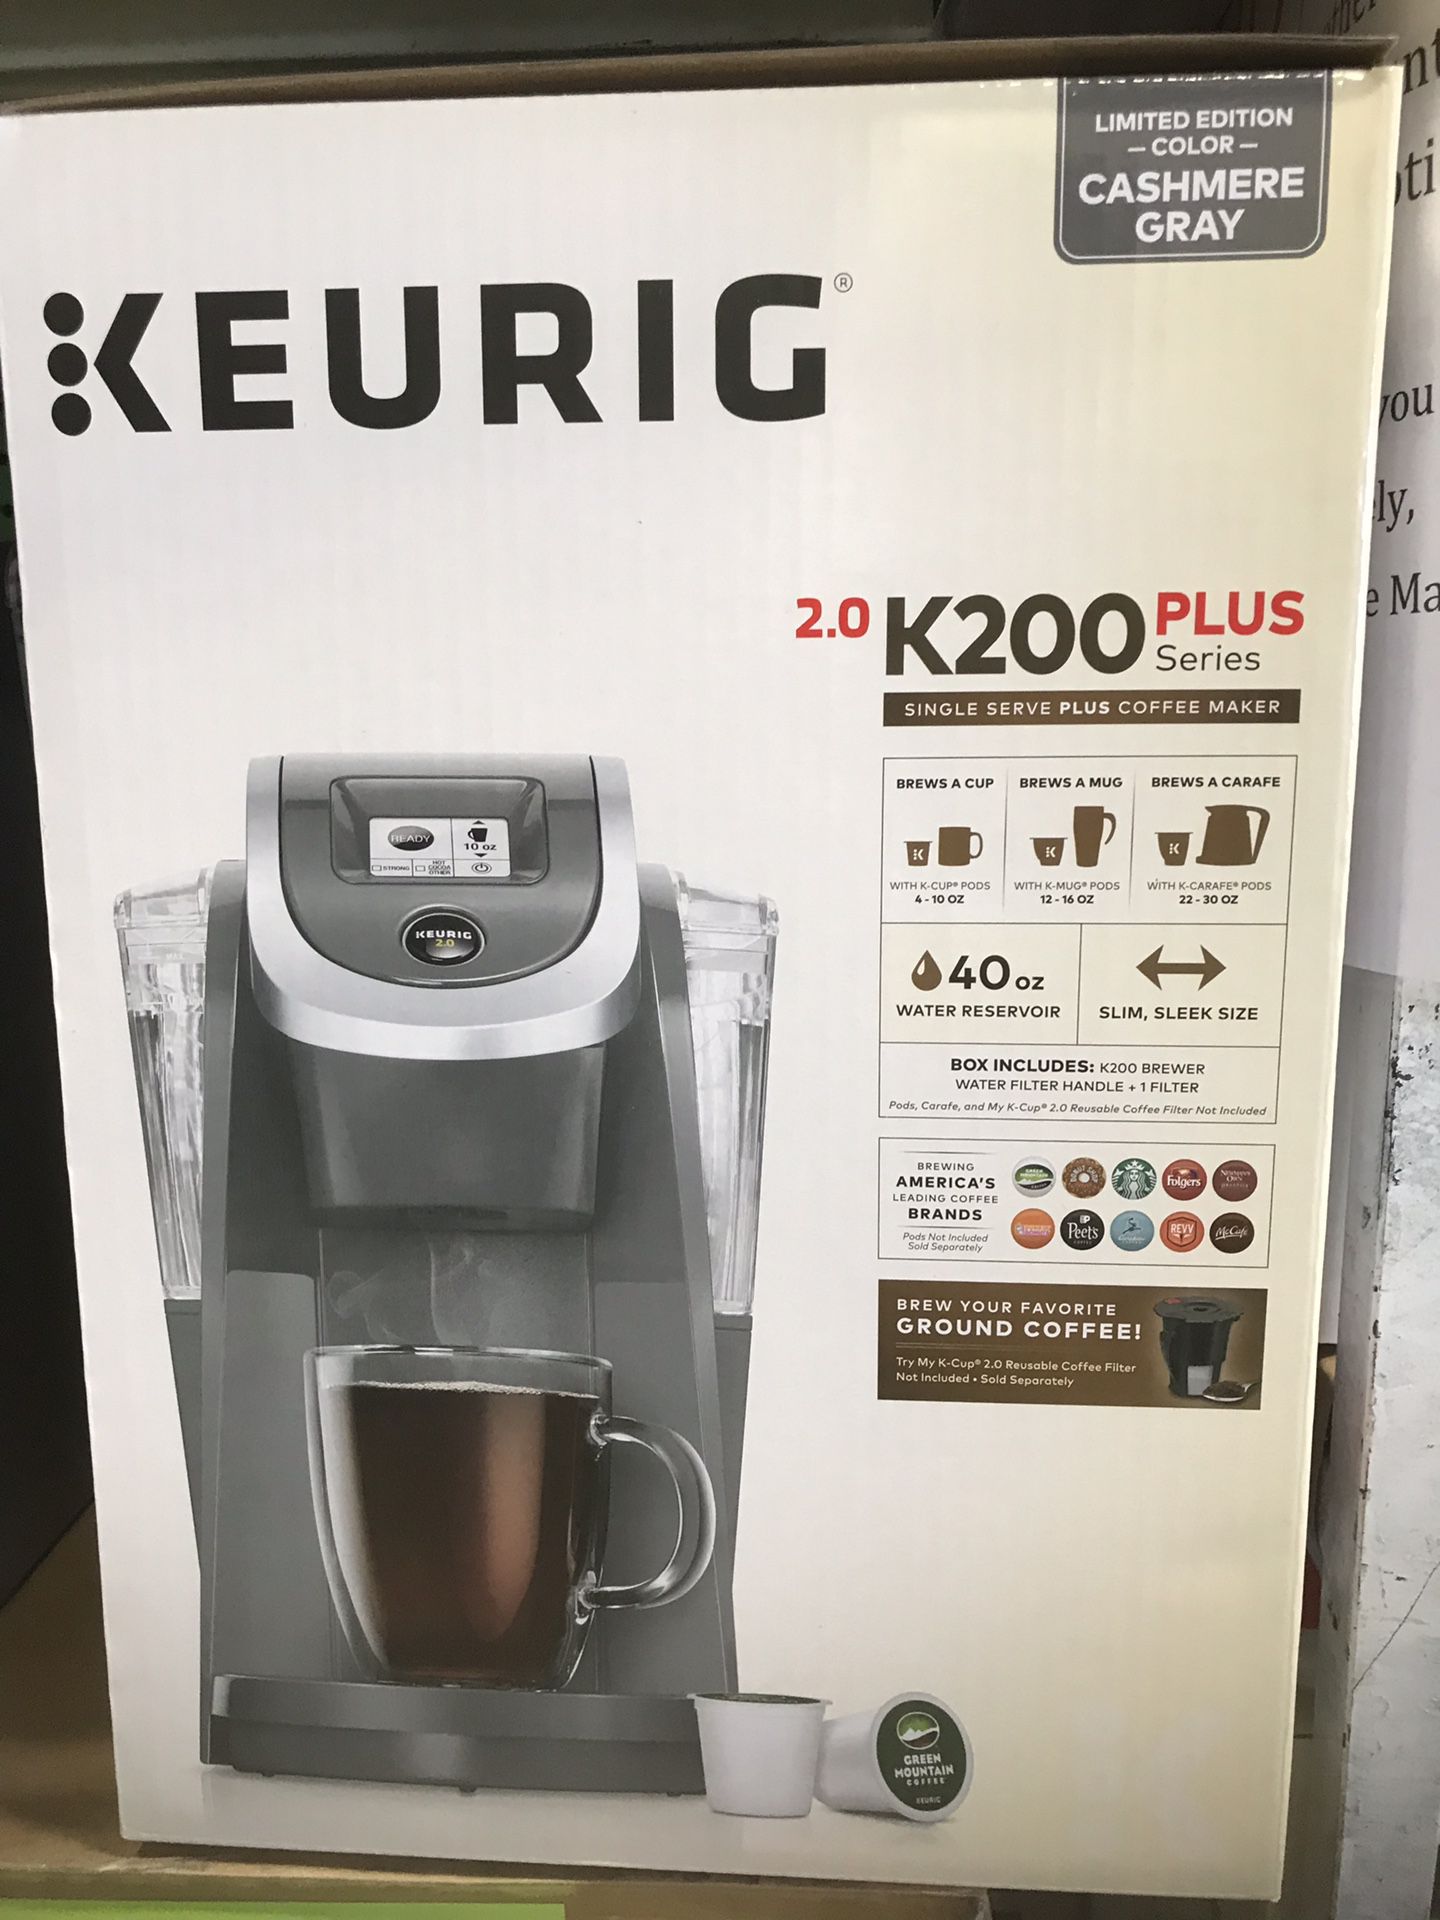 New Keurig 2.0 in box gray color